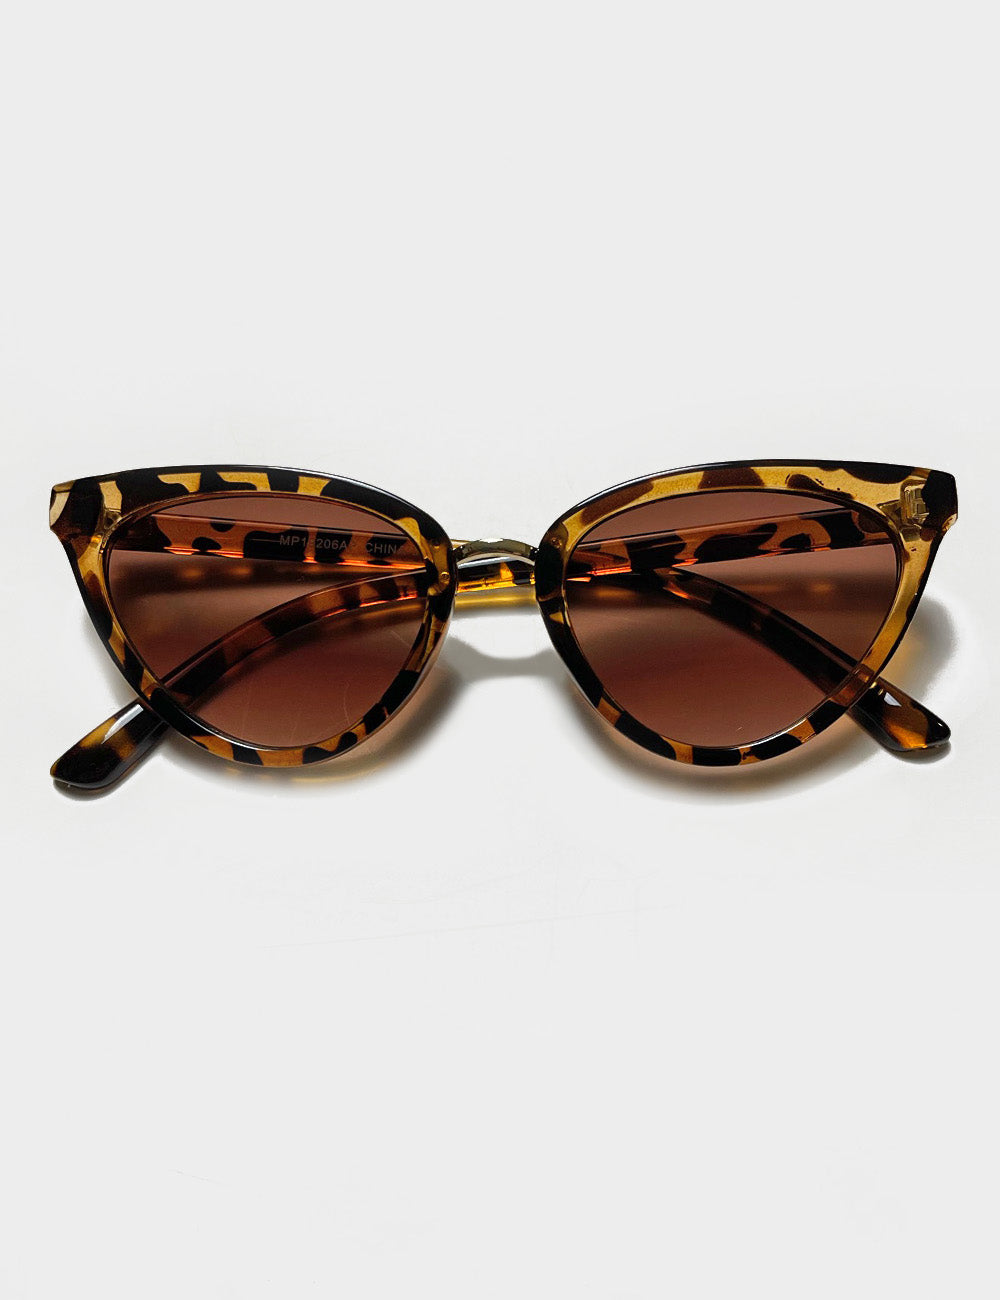 Tortoise Brown 1950s Inspired Delicate Classic Frame Sunglasses